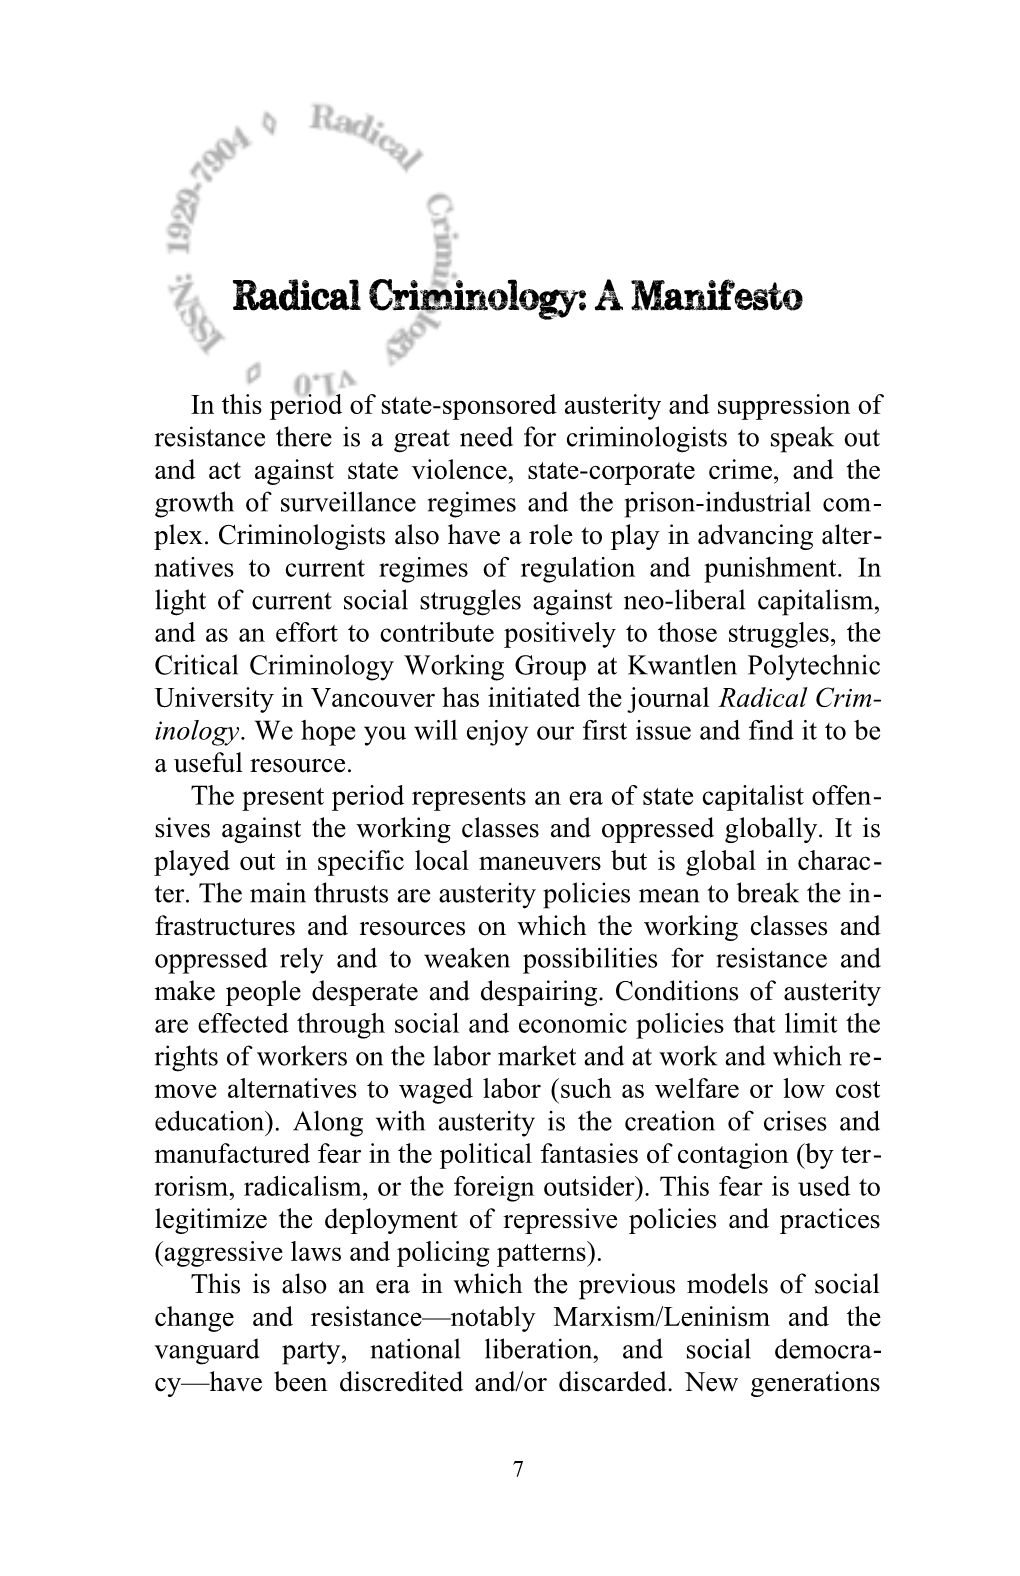 Radical Criminology: a Manifesto